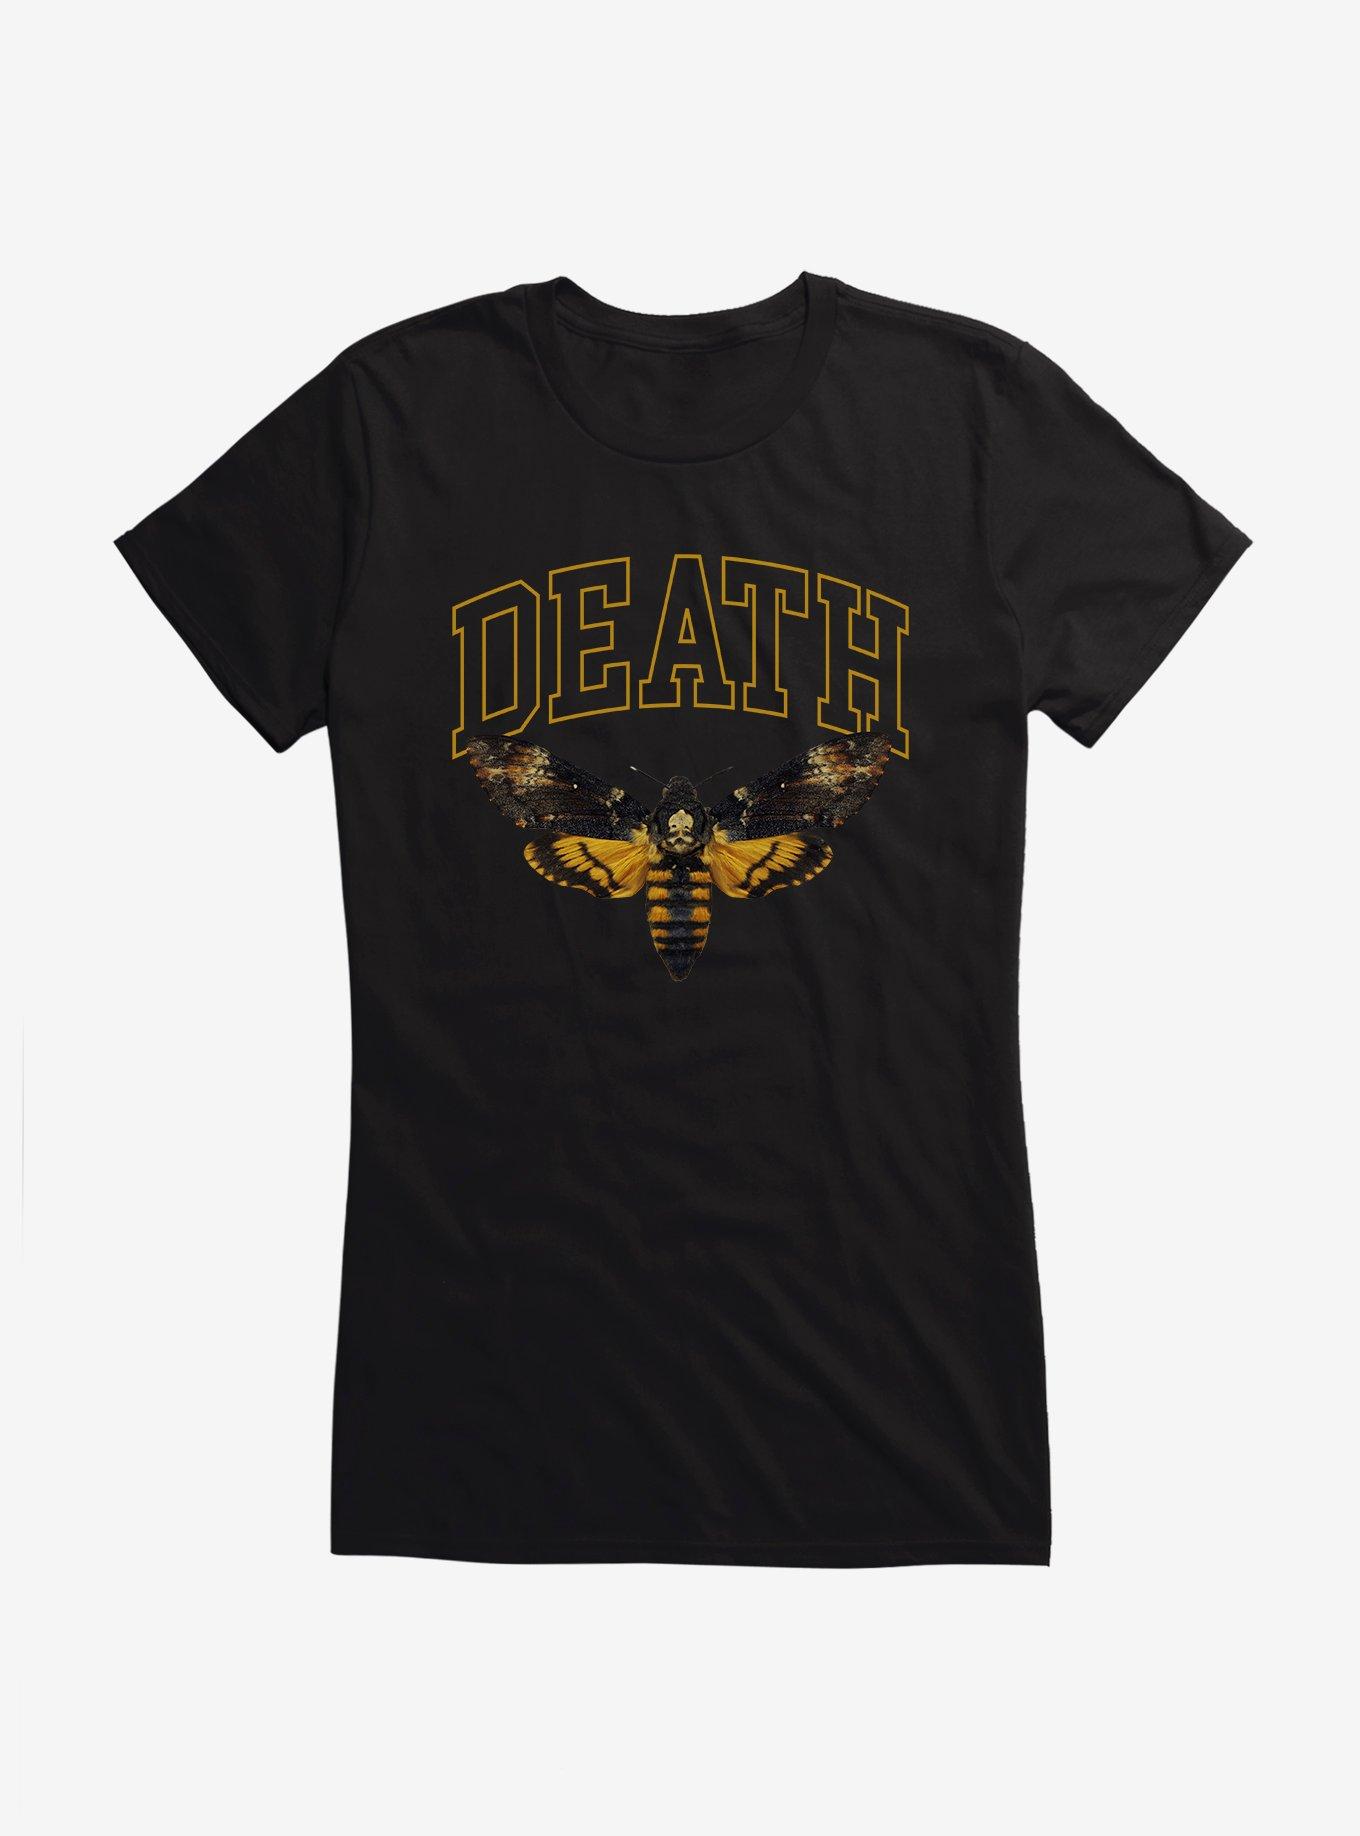 Hot Topic Death Moth Girls T-Shirt